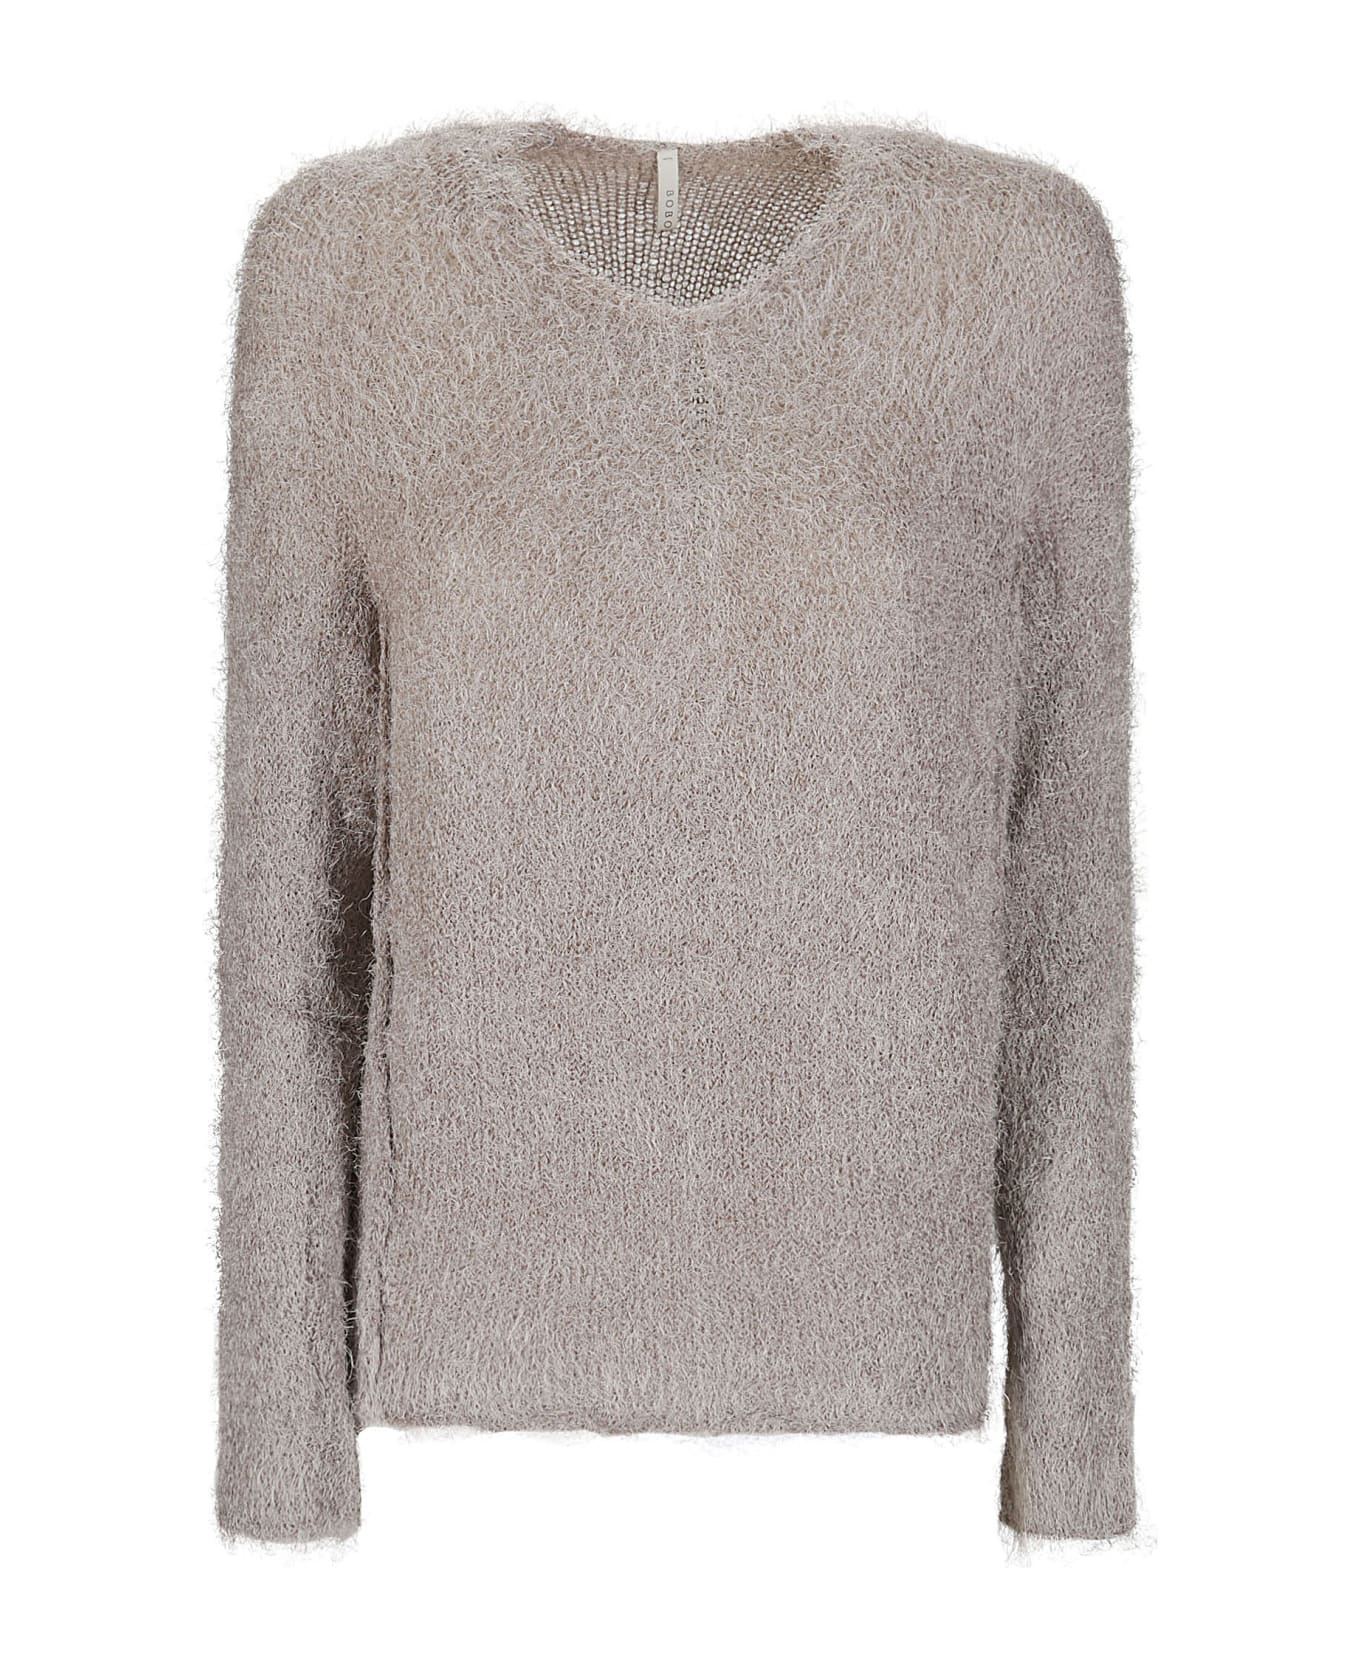 Boboutic Sweater - GRAY-PINK